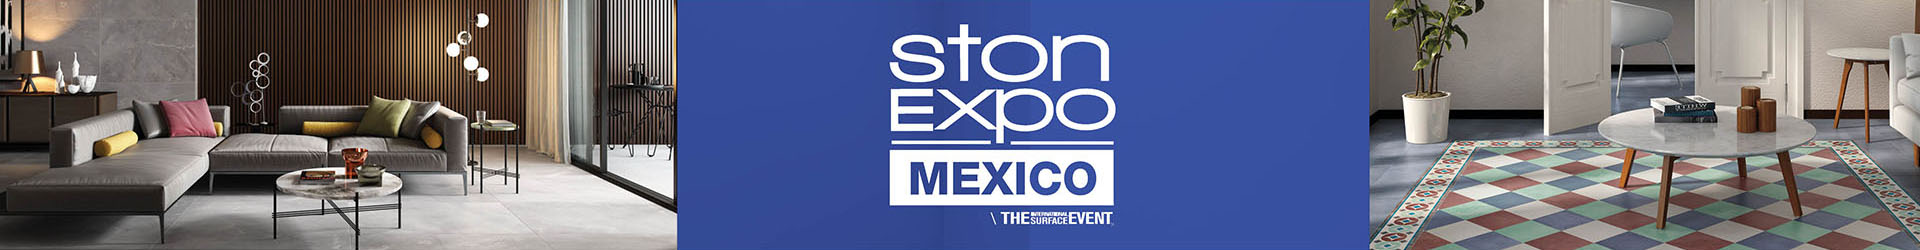 StonExpo Mexico